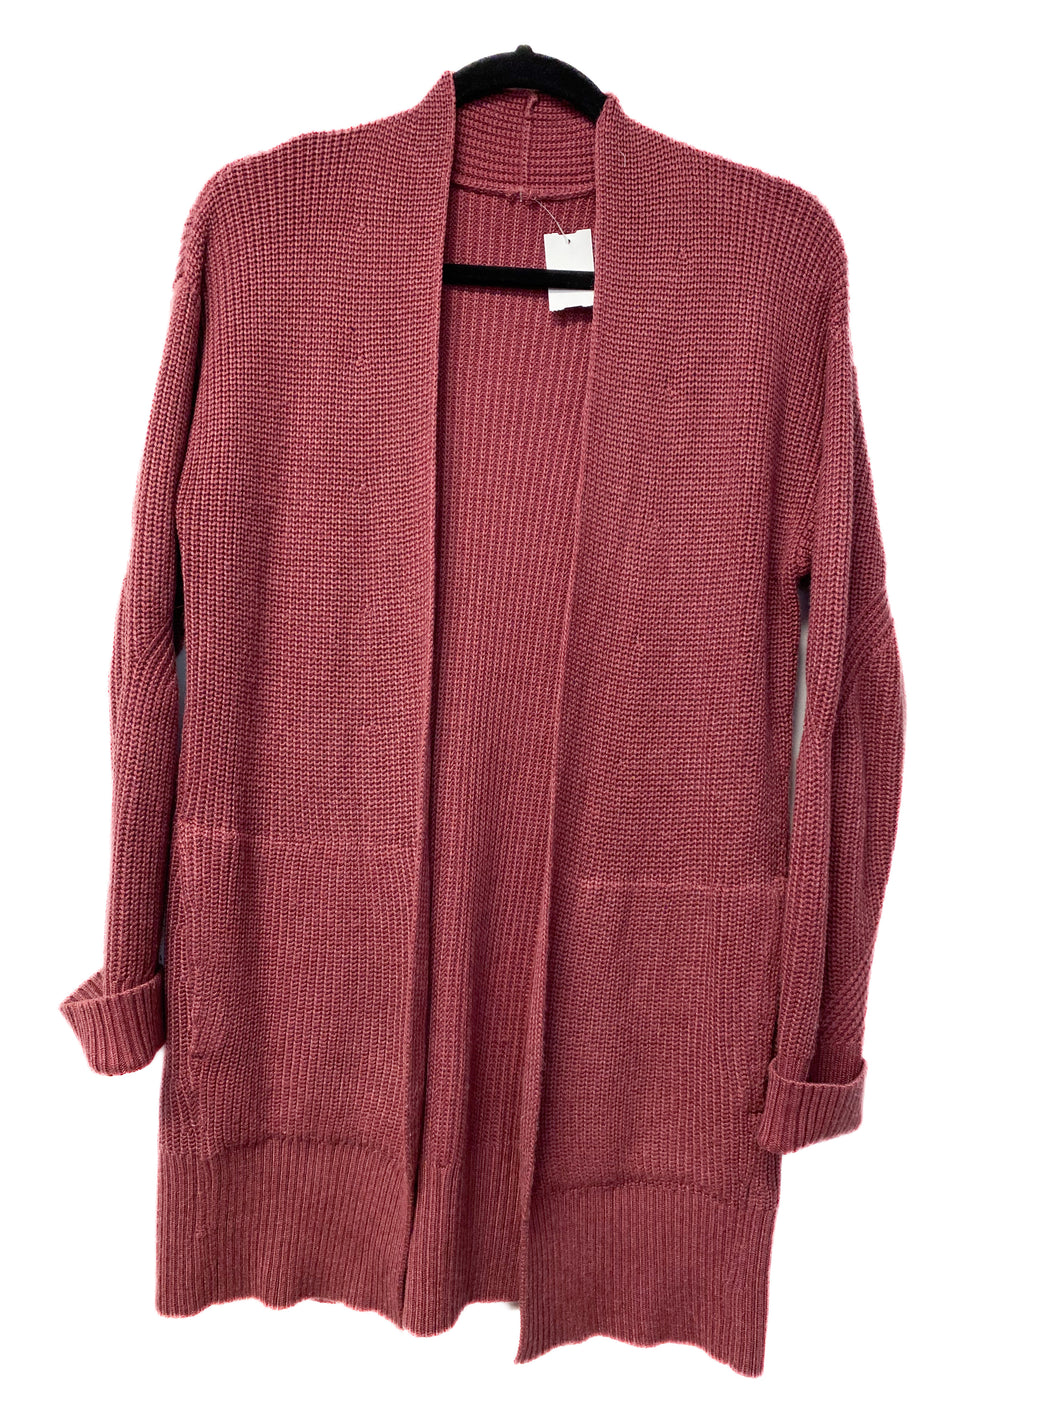 Lululemon Sweater (S)